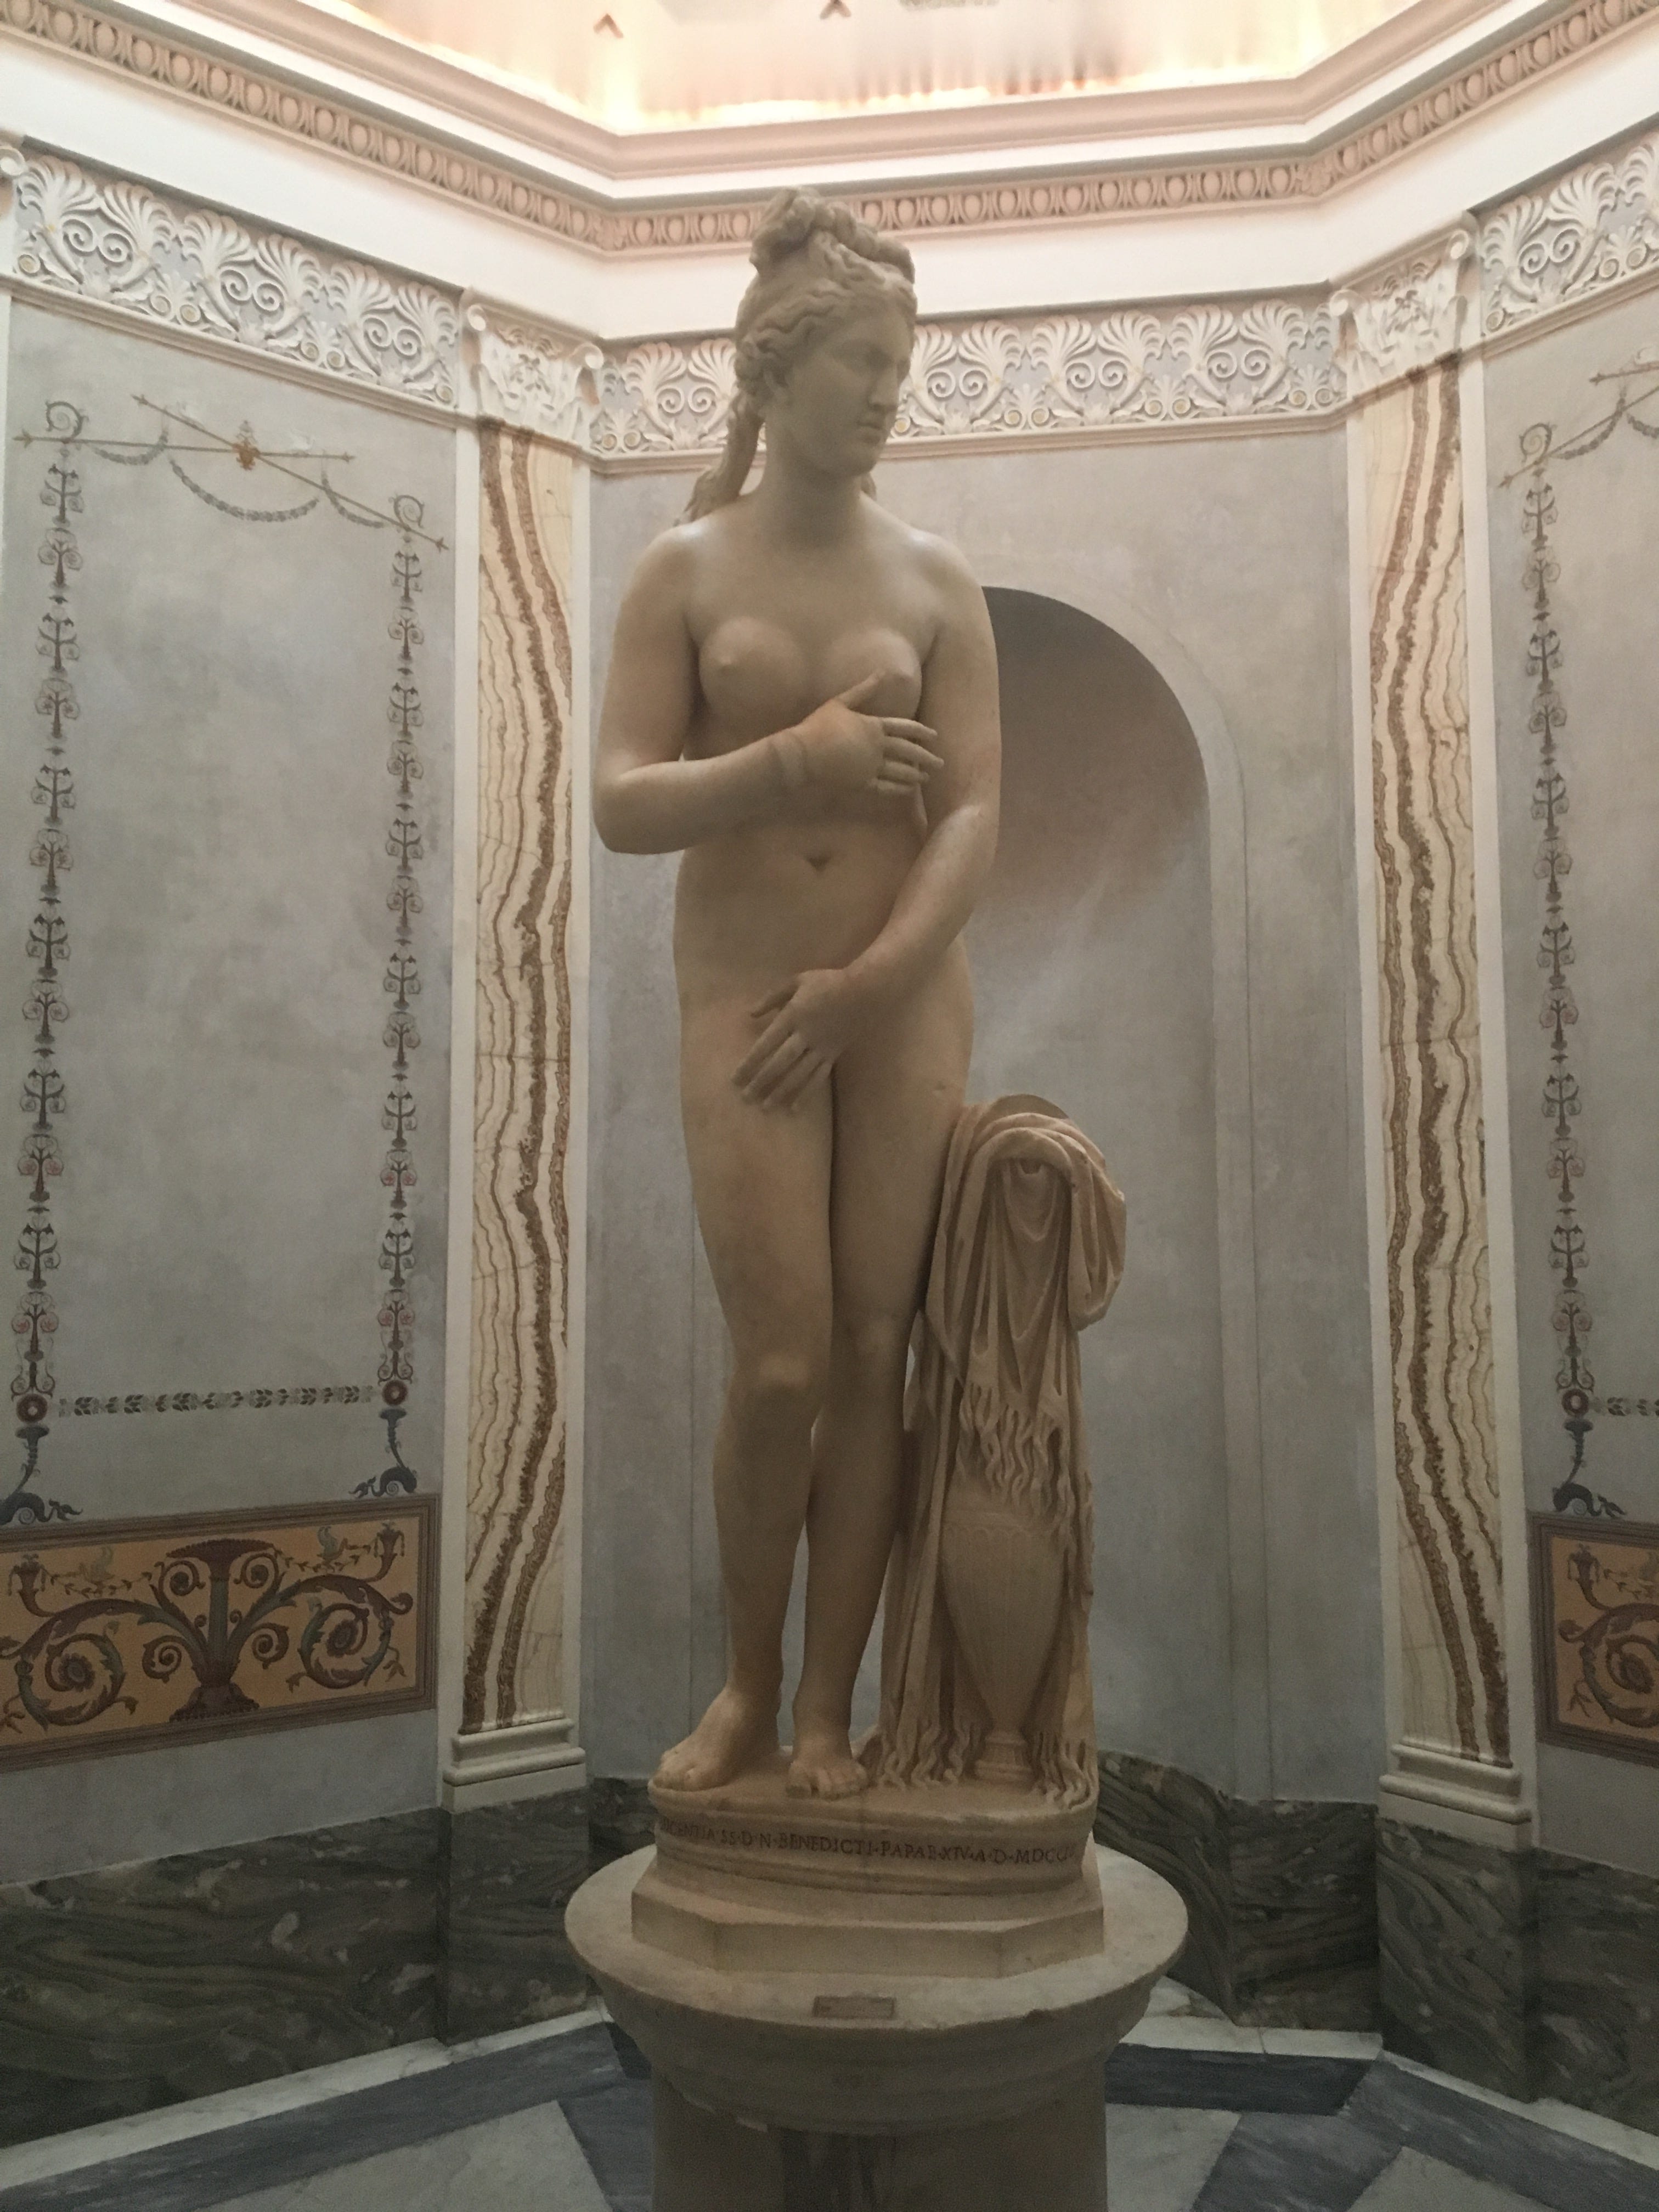 Roman statue of Venus. The statue depicts the goddess Venus in the